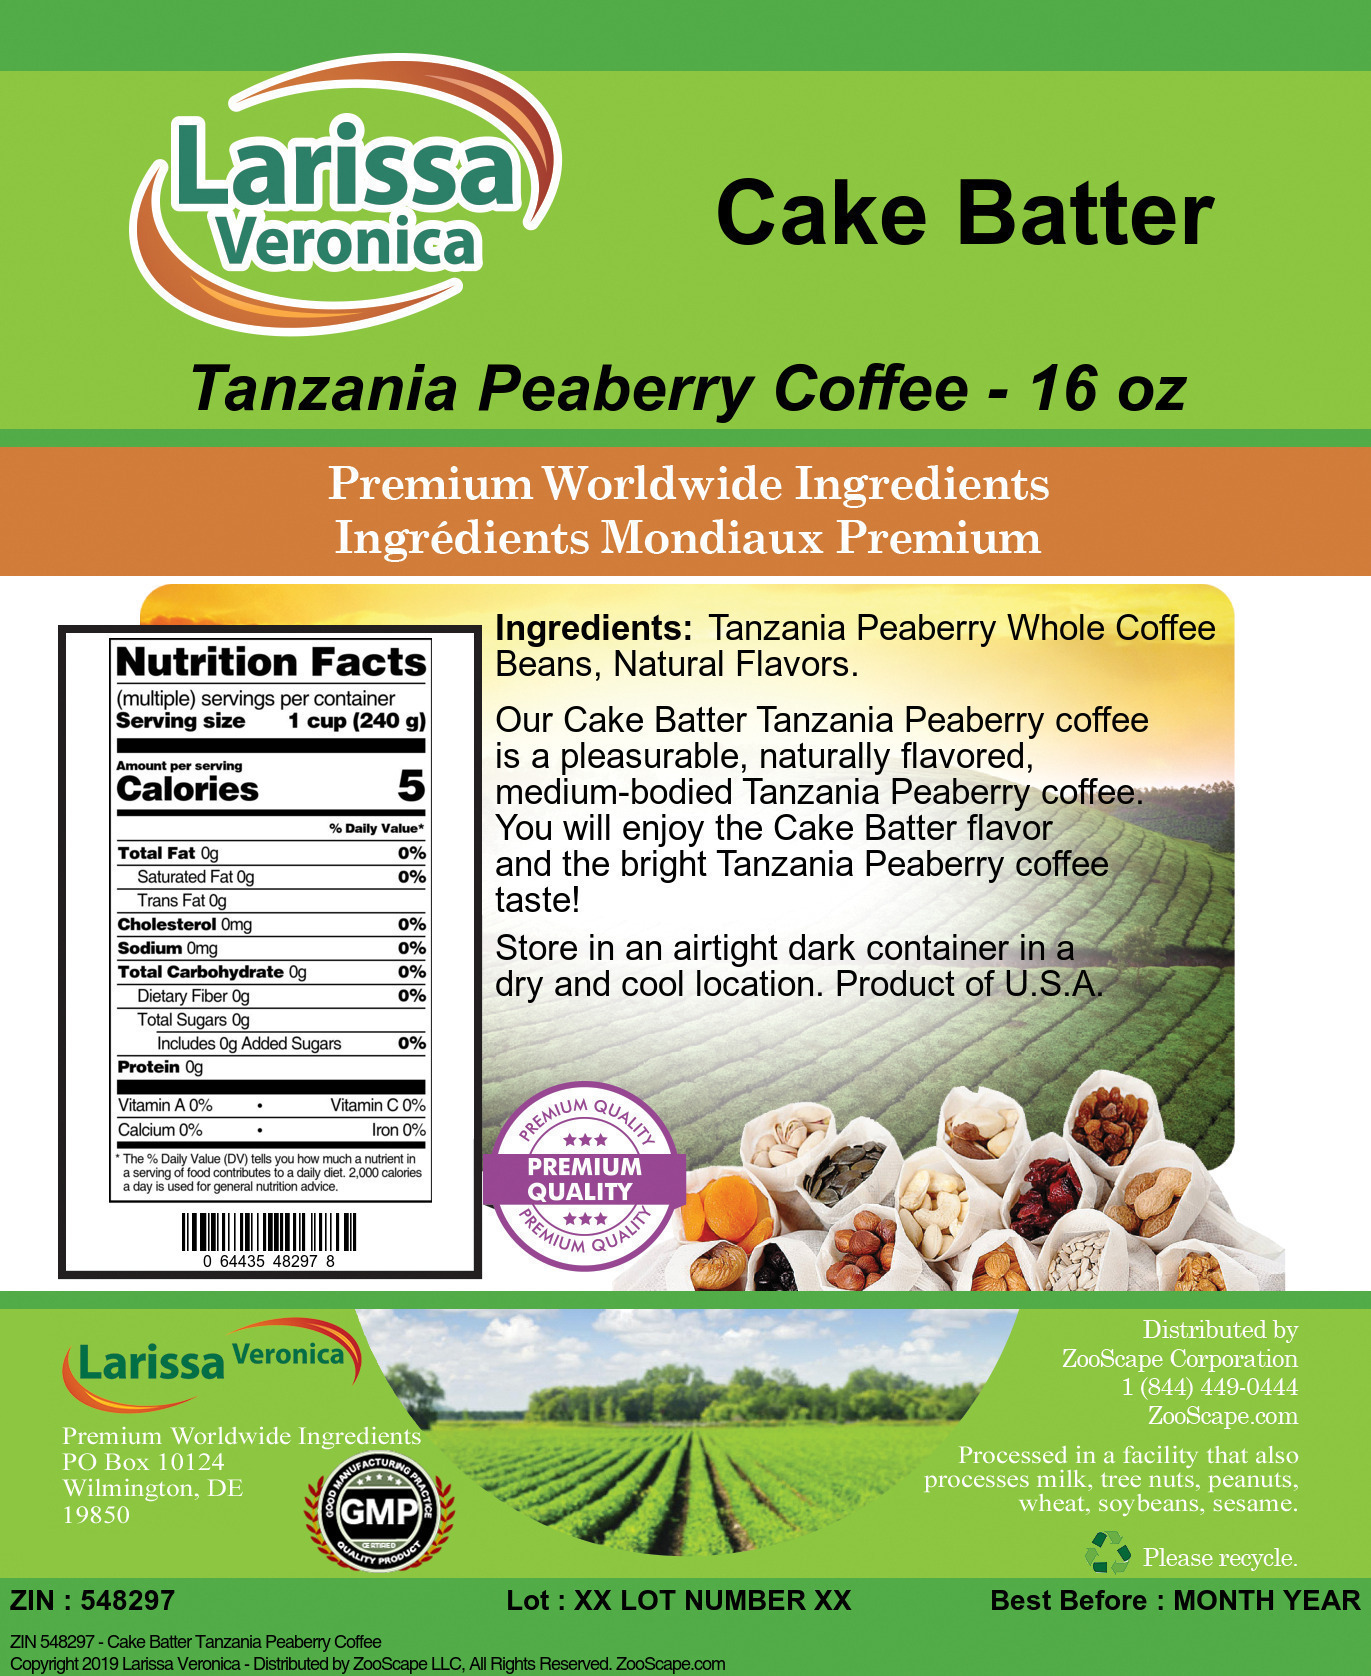 Cake Batter Tanzania Peaberry Coffee - Label